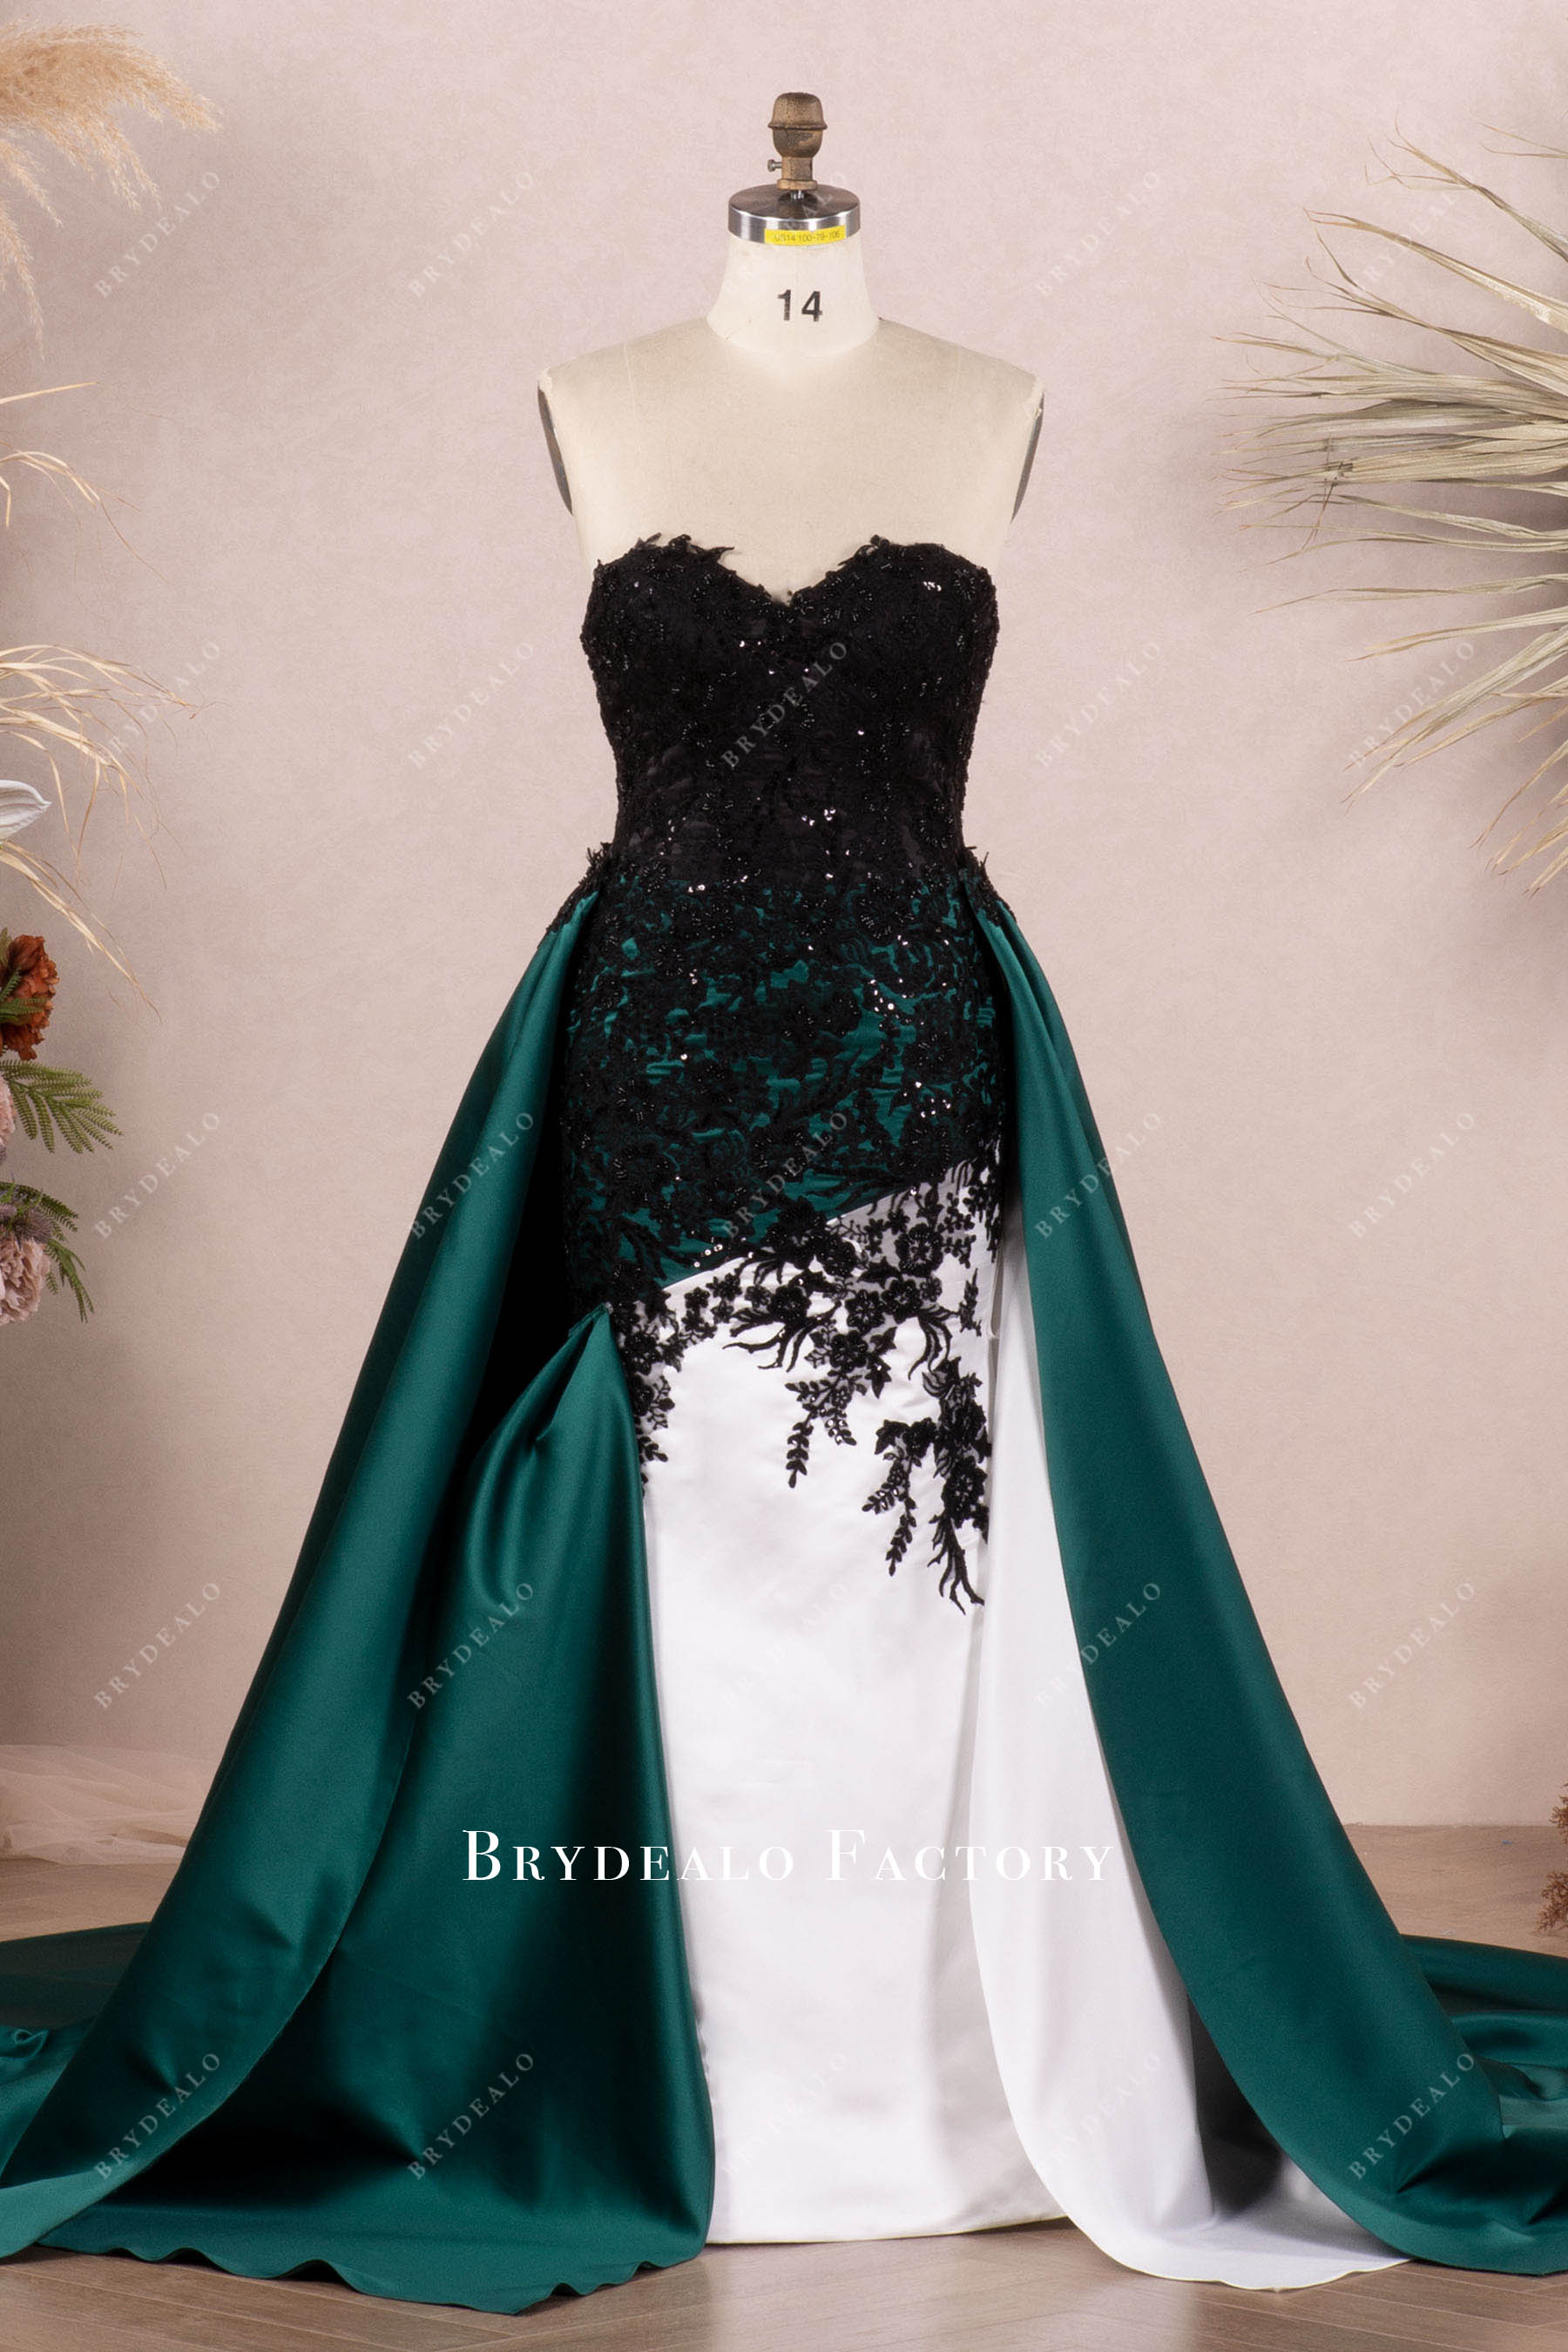 strapless black lace white green satin gothic wedding dress